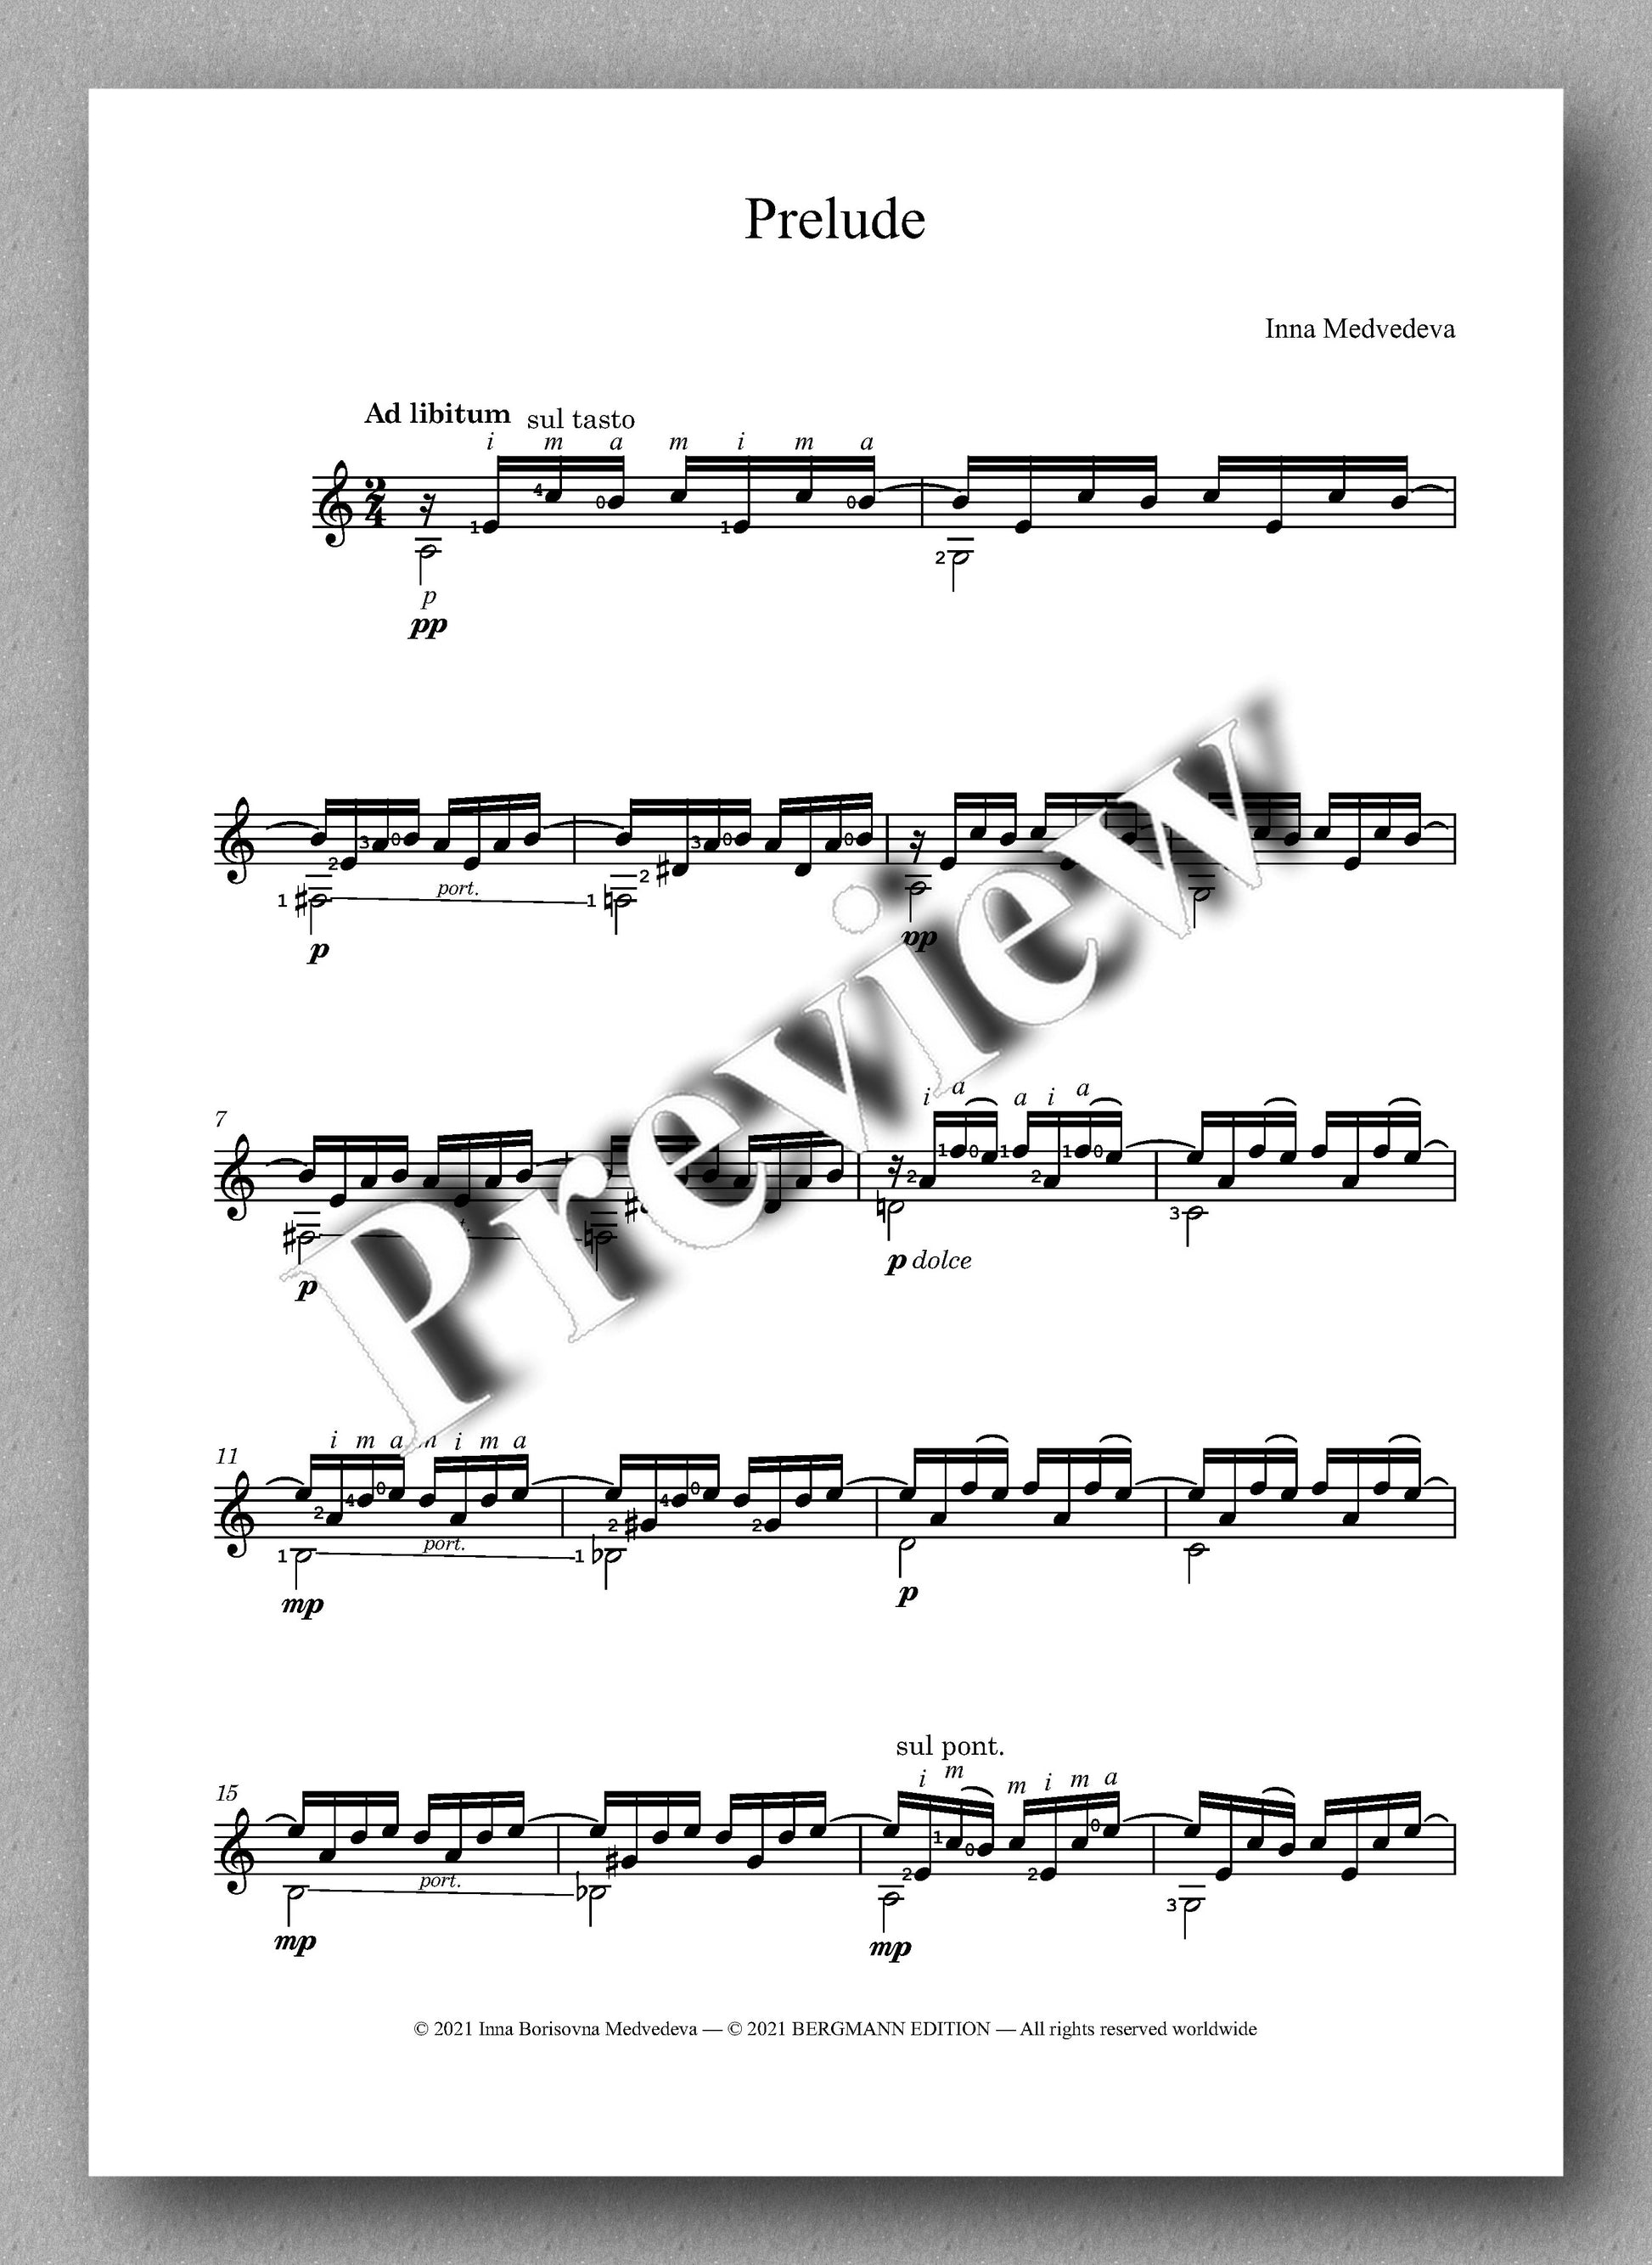 Medvedeva, Prelude - music score